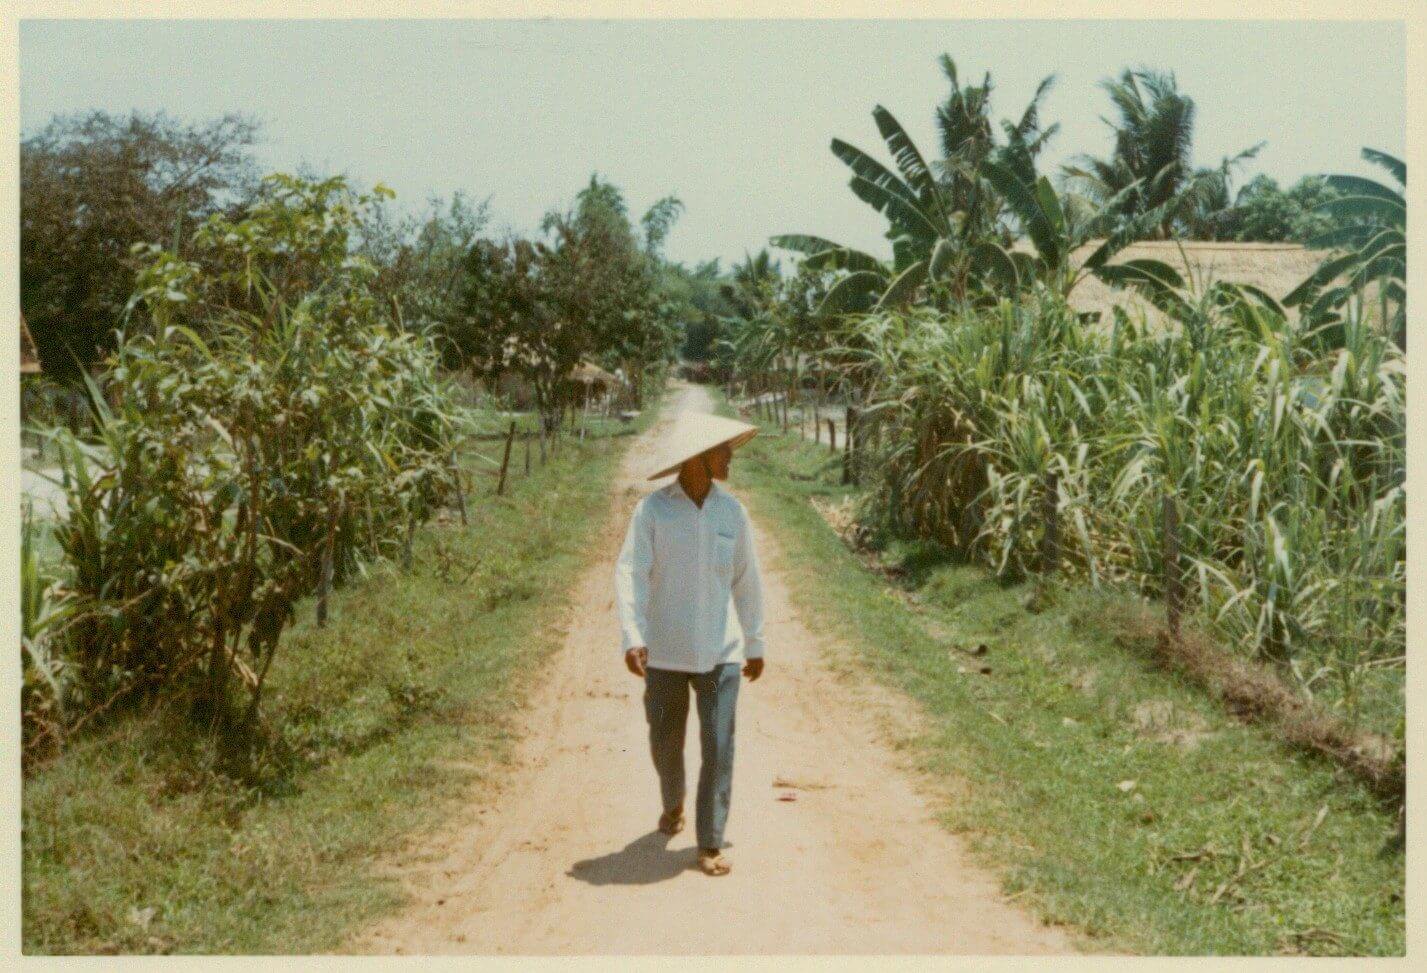 A Vietnamese civilian walking through fields.